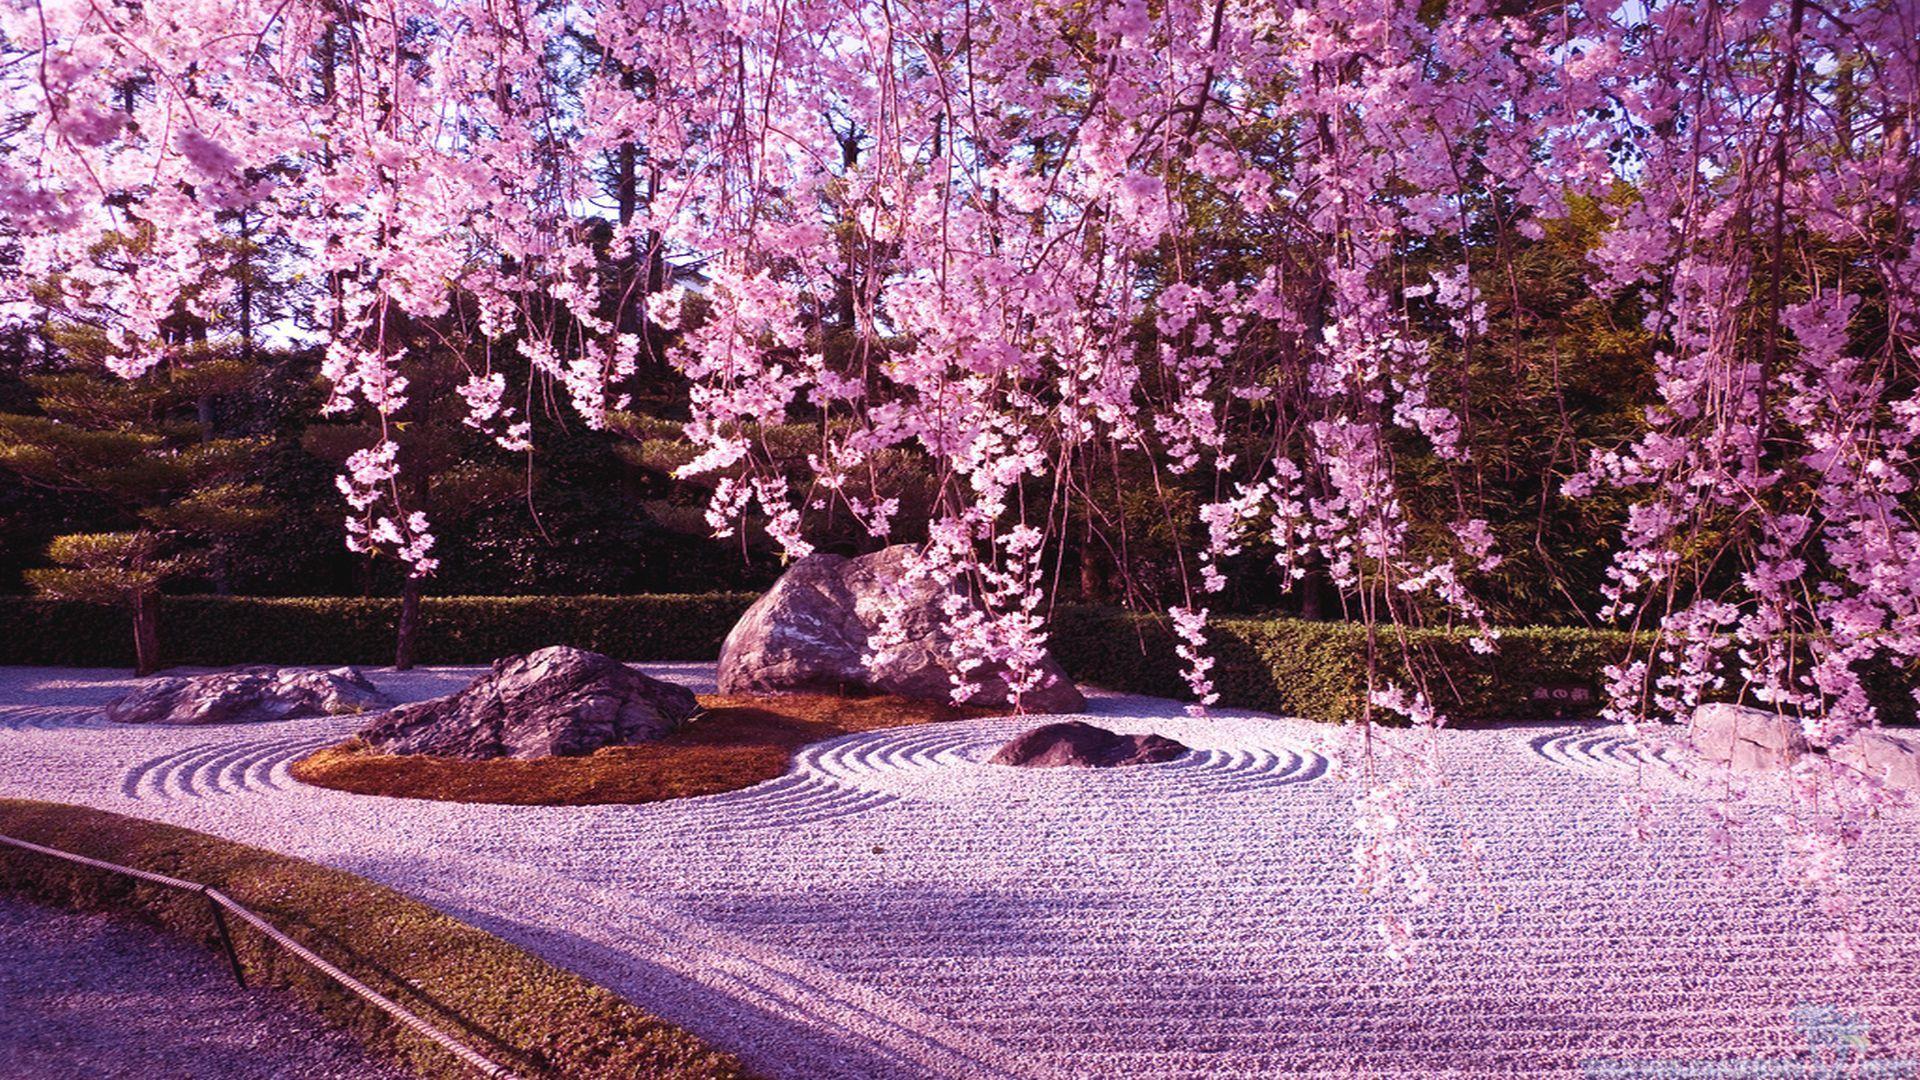 Zen Japanese Cherry Blossom Wallpaper Free Zen